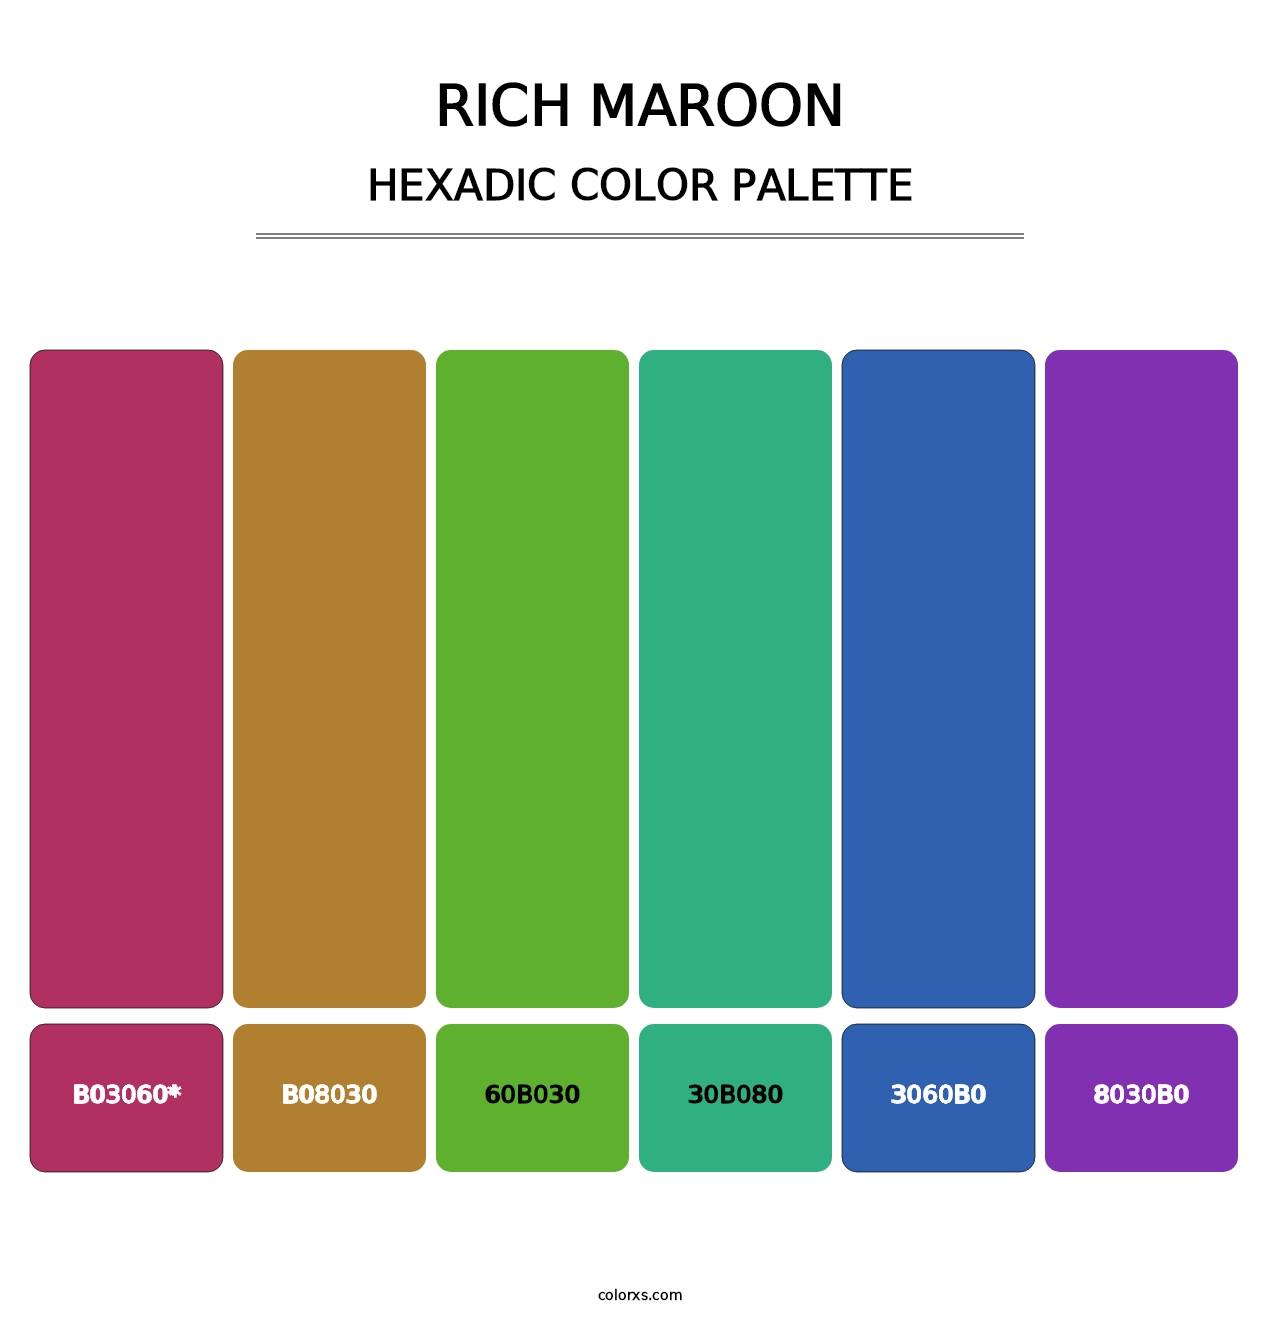 Rich Maroon - Hexadic Color Palette